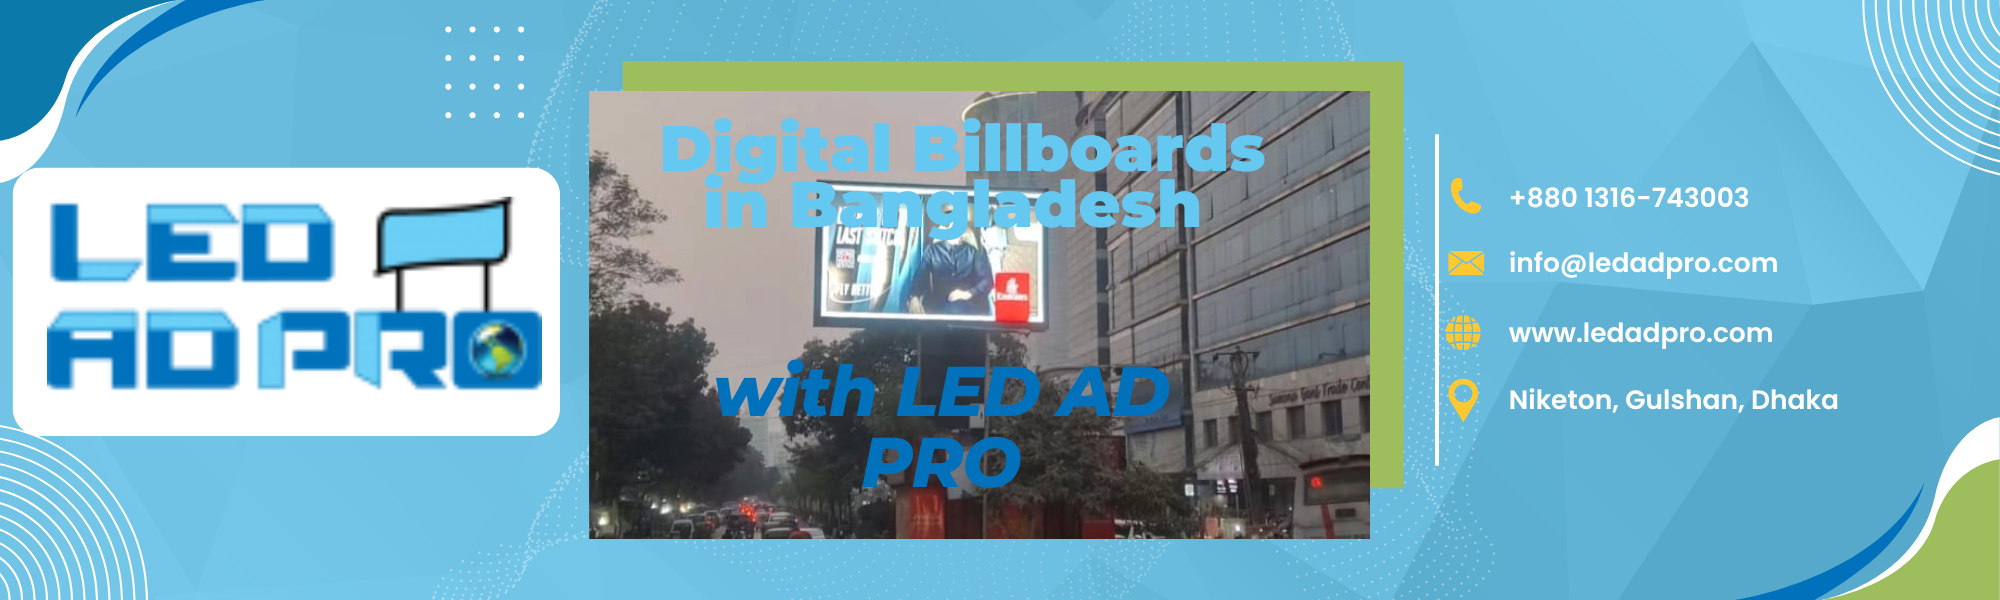 Introduction to Digital Billboard in Bangladesh